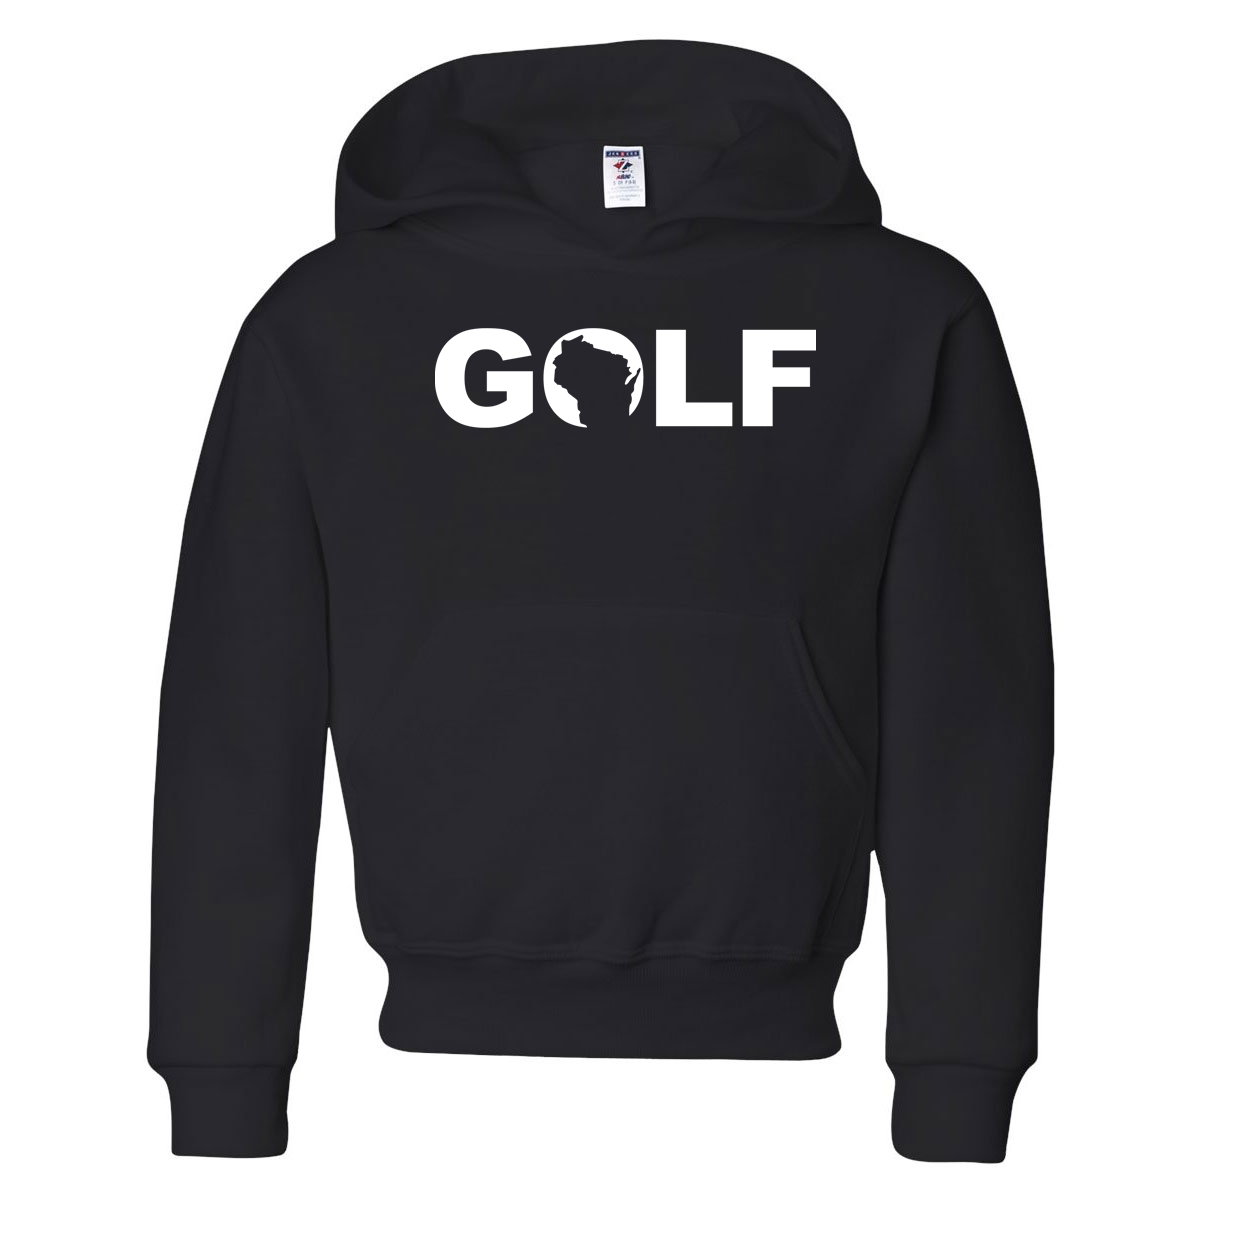 Golf Wisconsin Classic Youth Sweatshirt Black (White Logo)